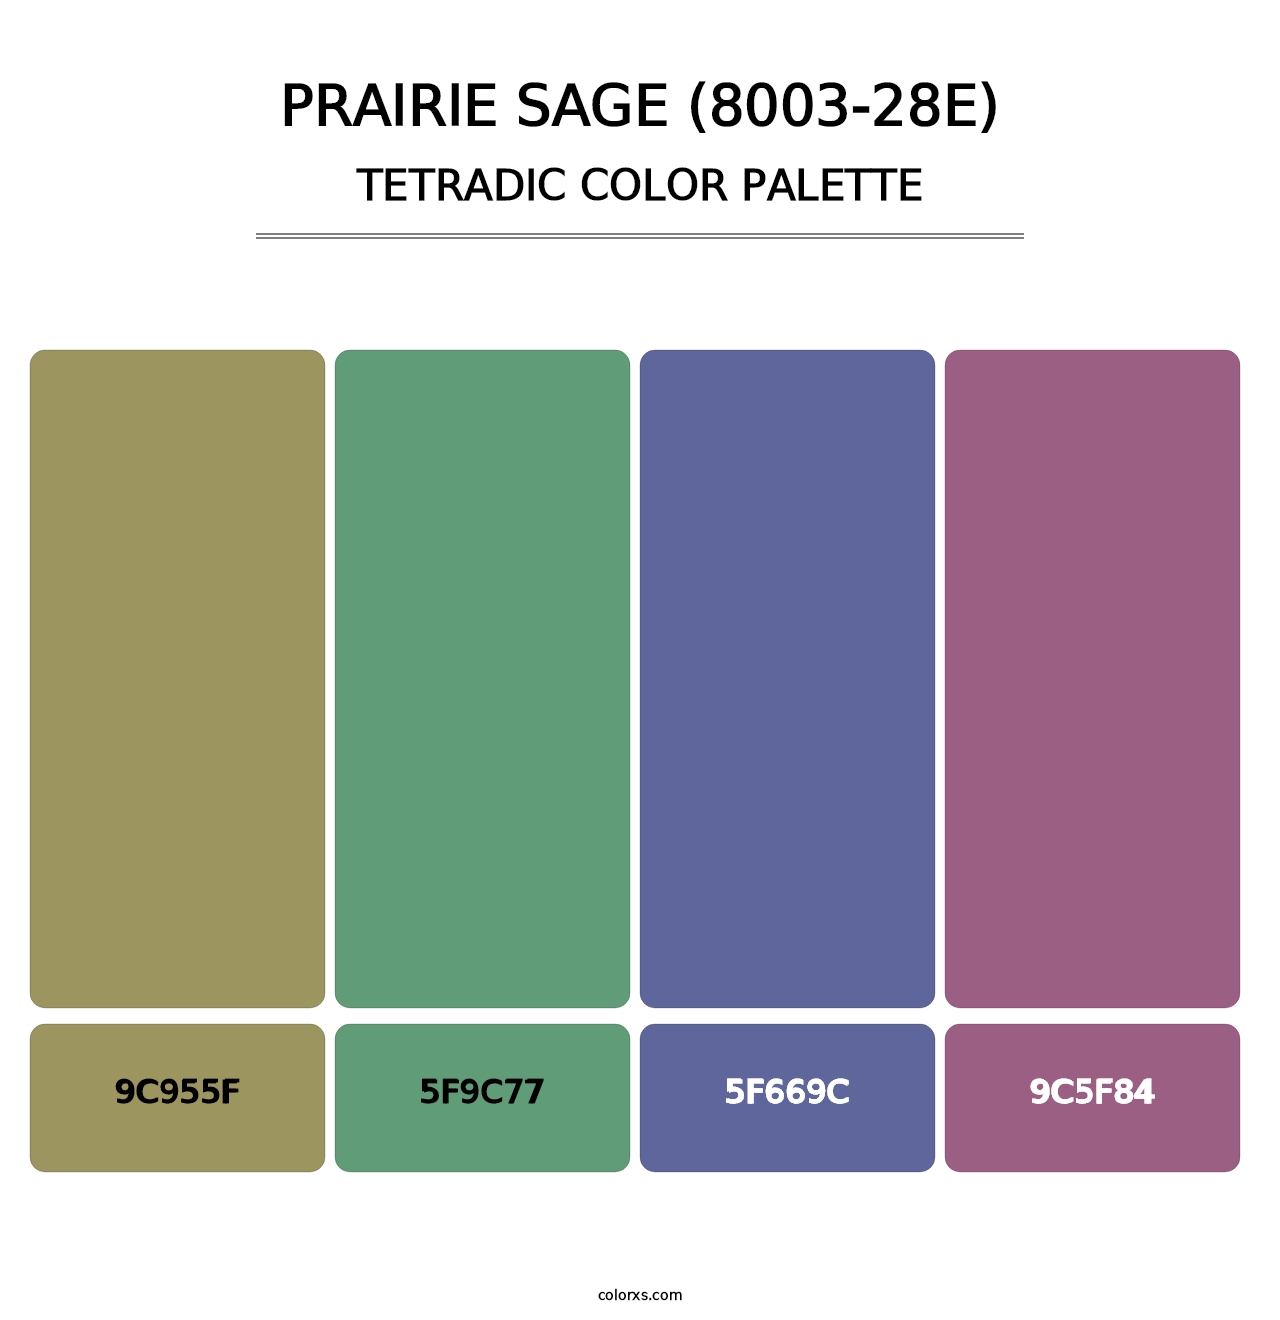 Prairie Sage (8003-28E) - Tetradic Color Palette